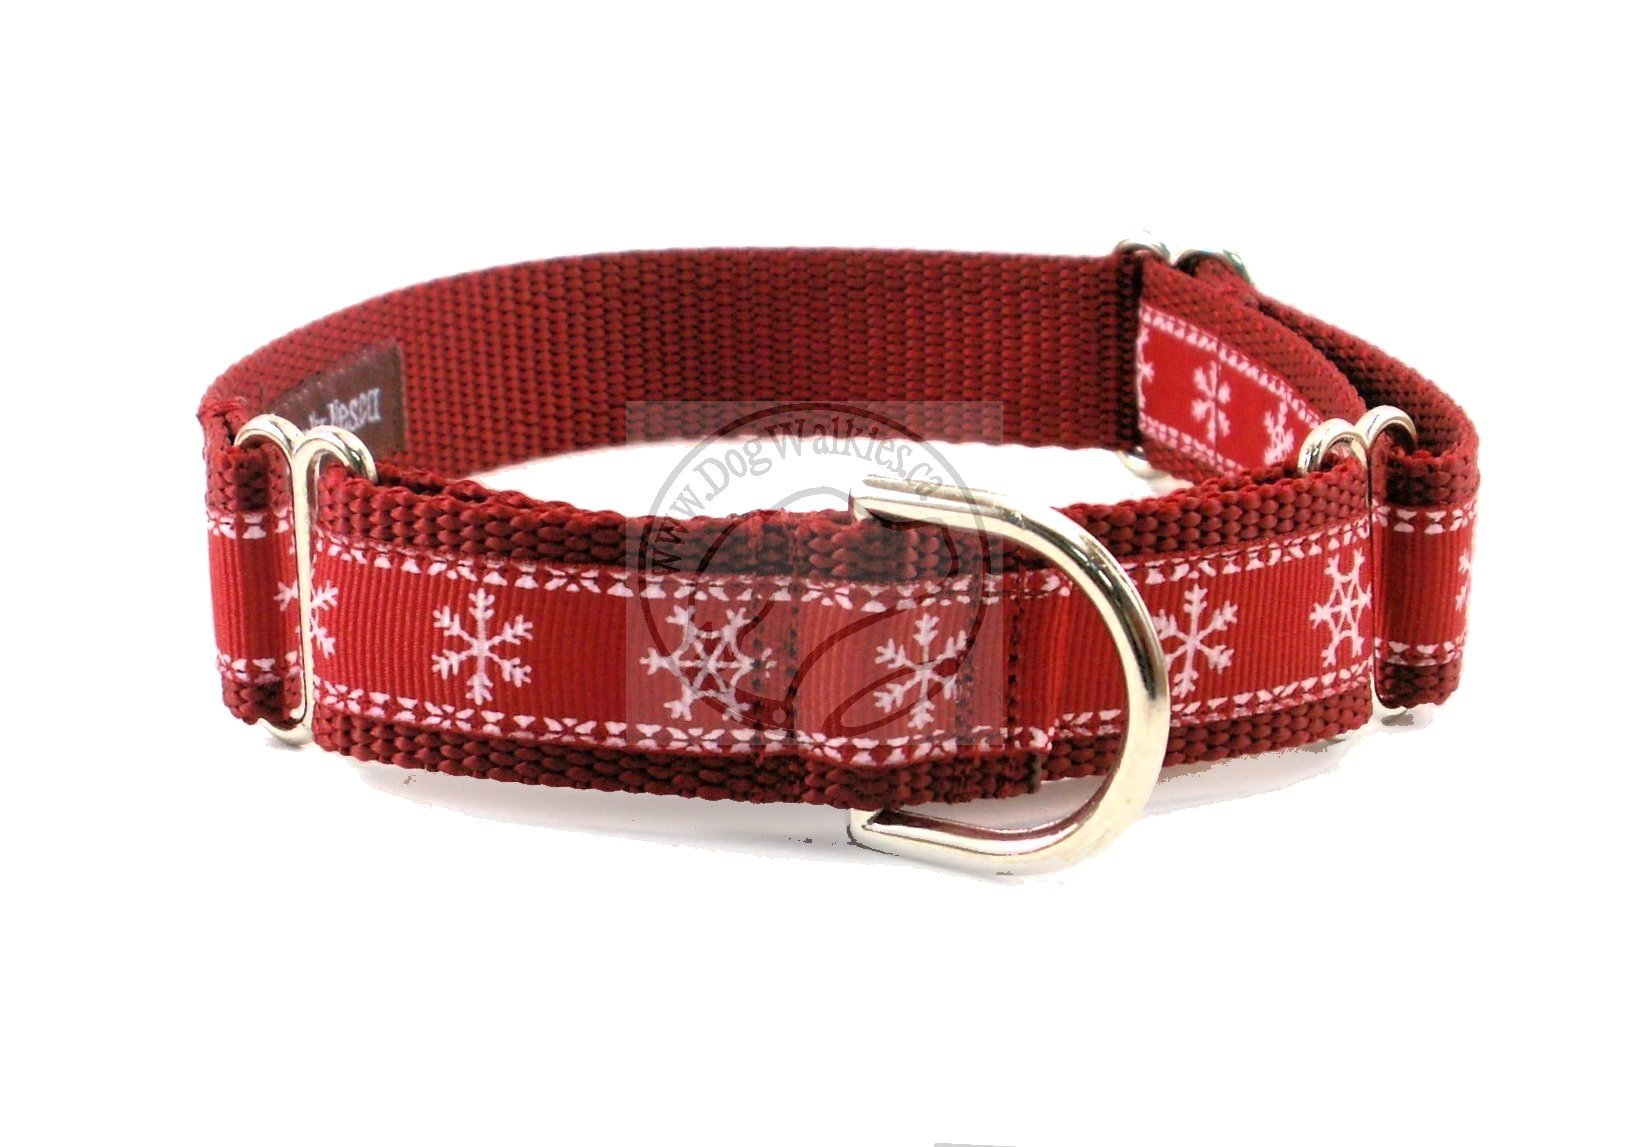 Snowflakes on Red - nylon dog collar